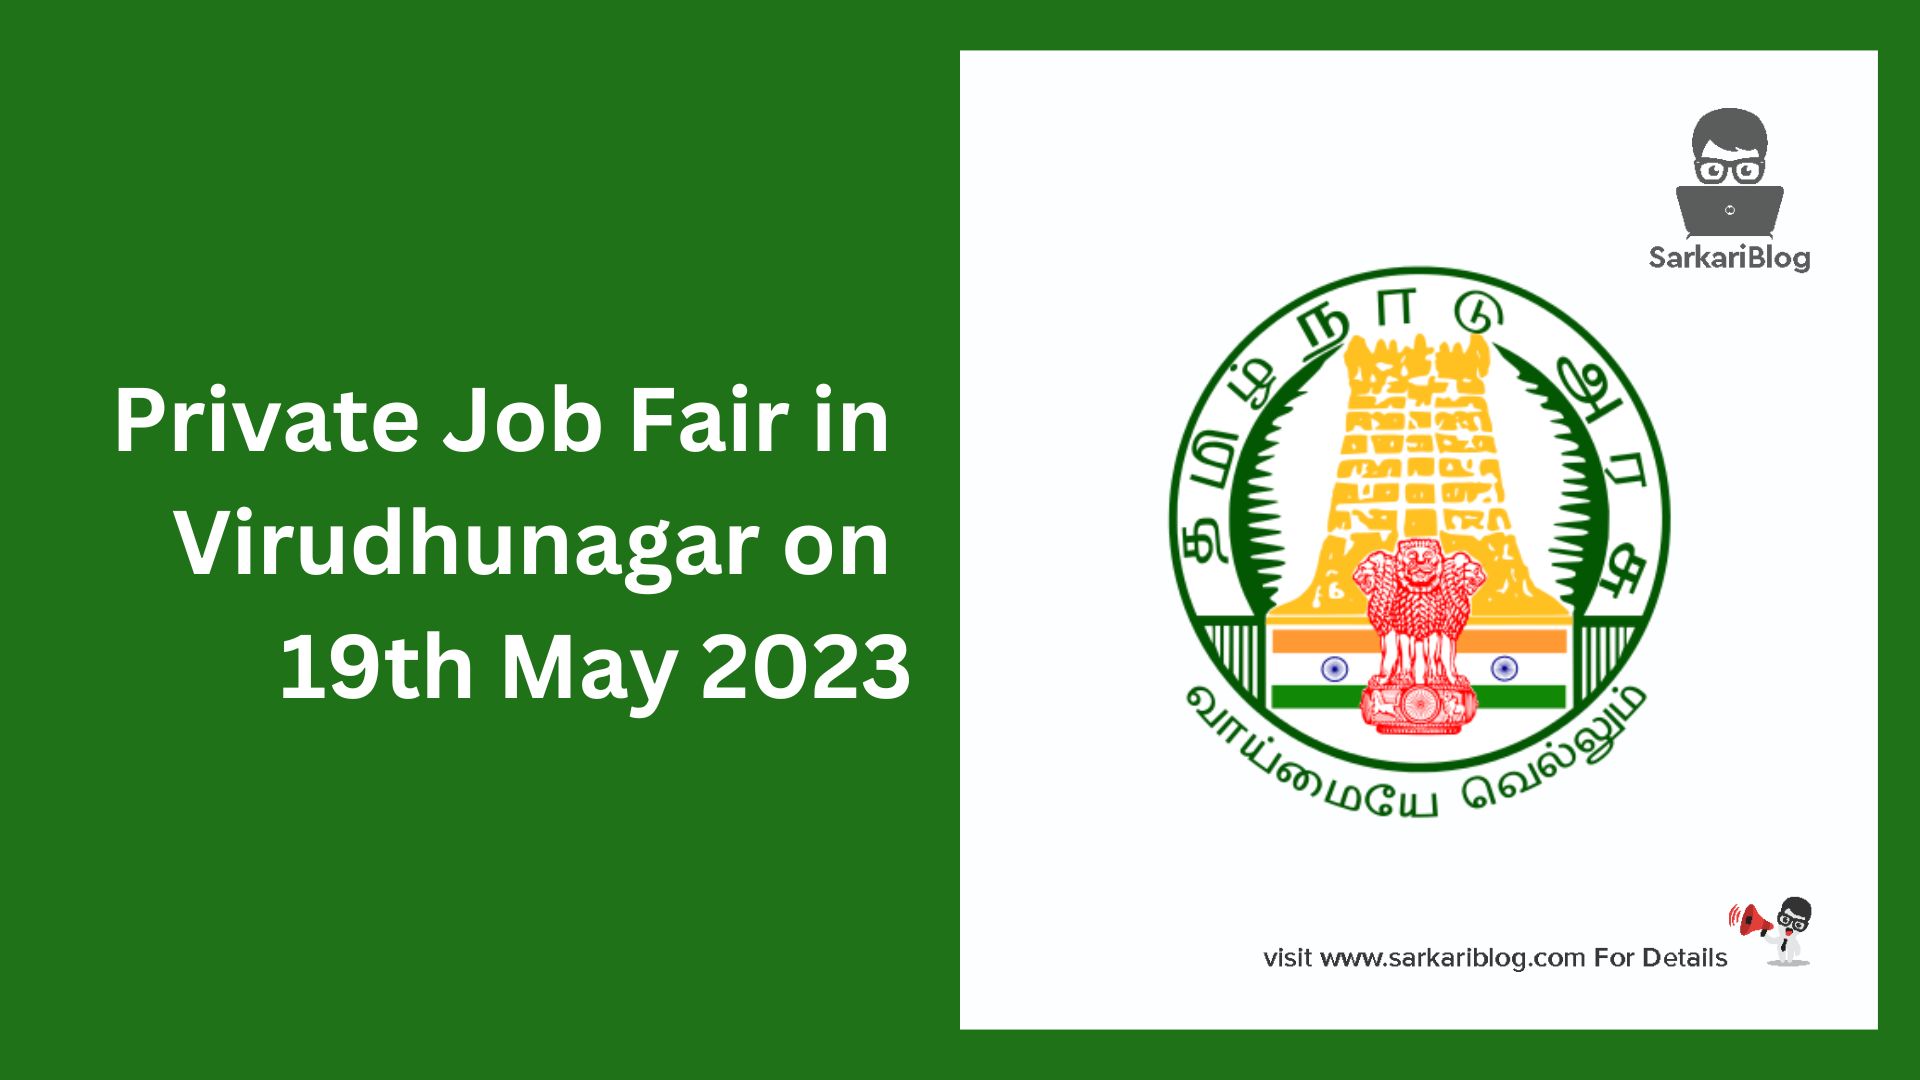 Private Job Fair in Virudhunagar on 19th May 2023